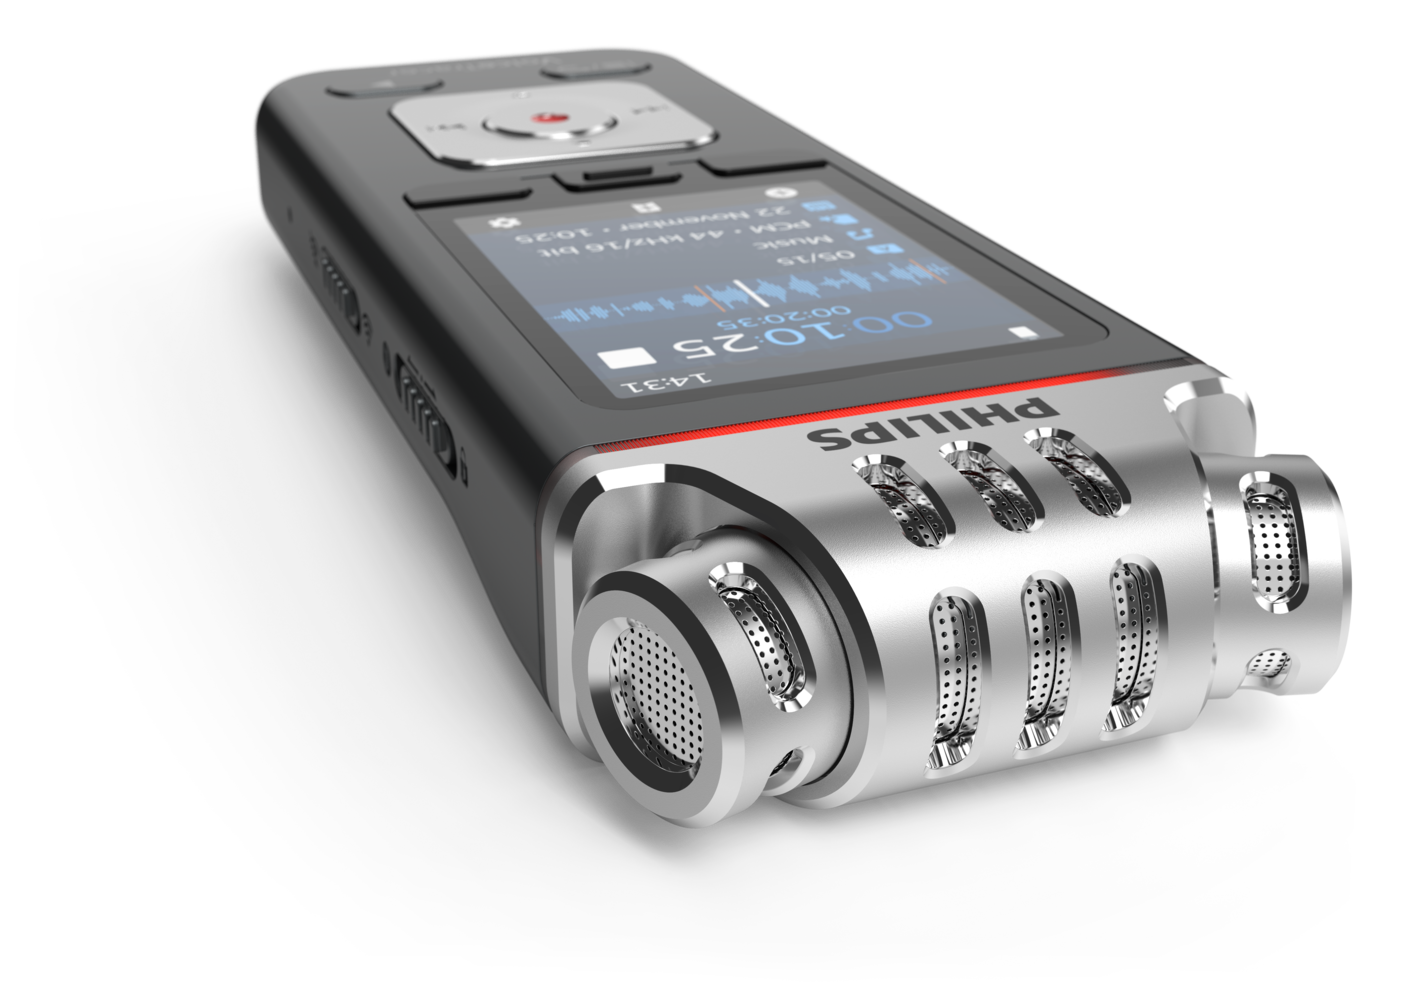 PHILIPS VoiceTracer Audiorecorder DVT6110